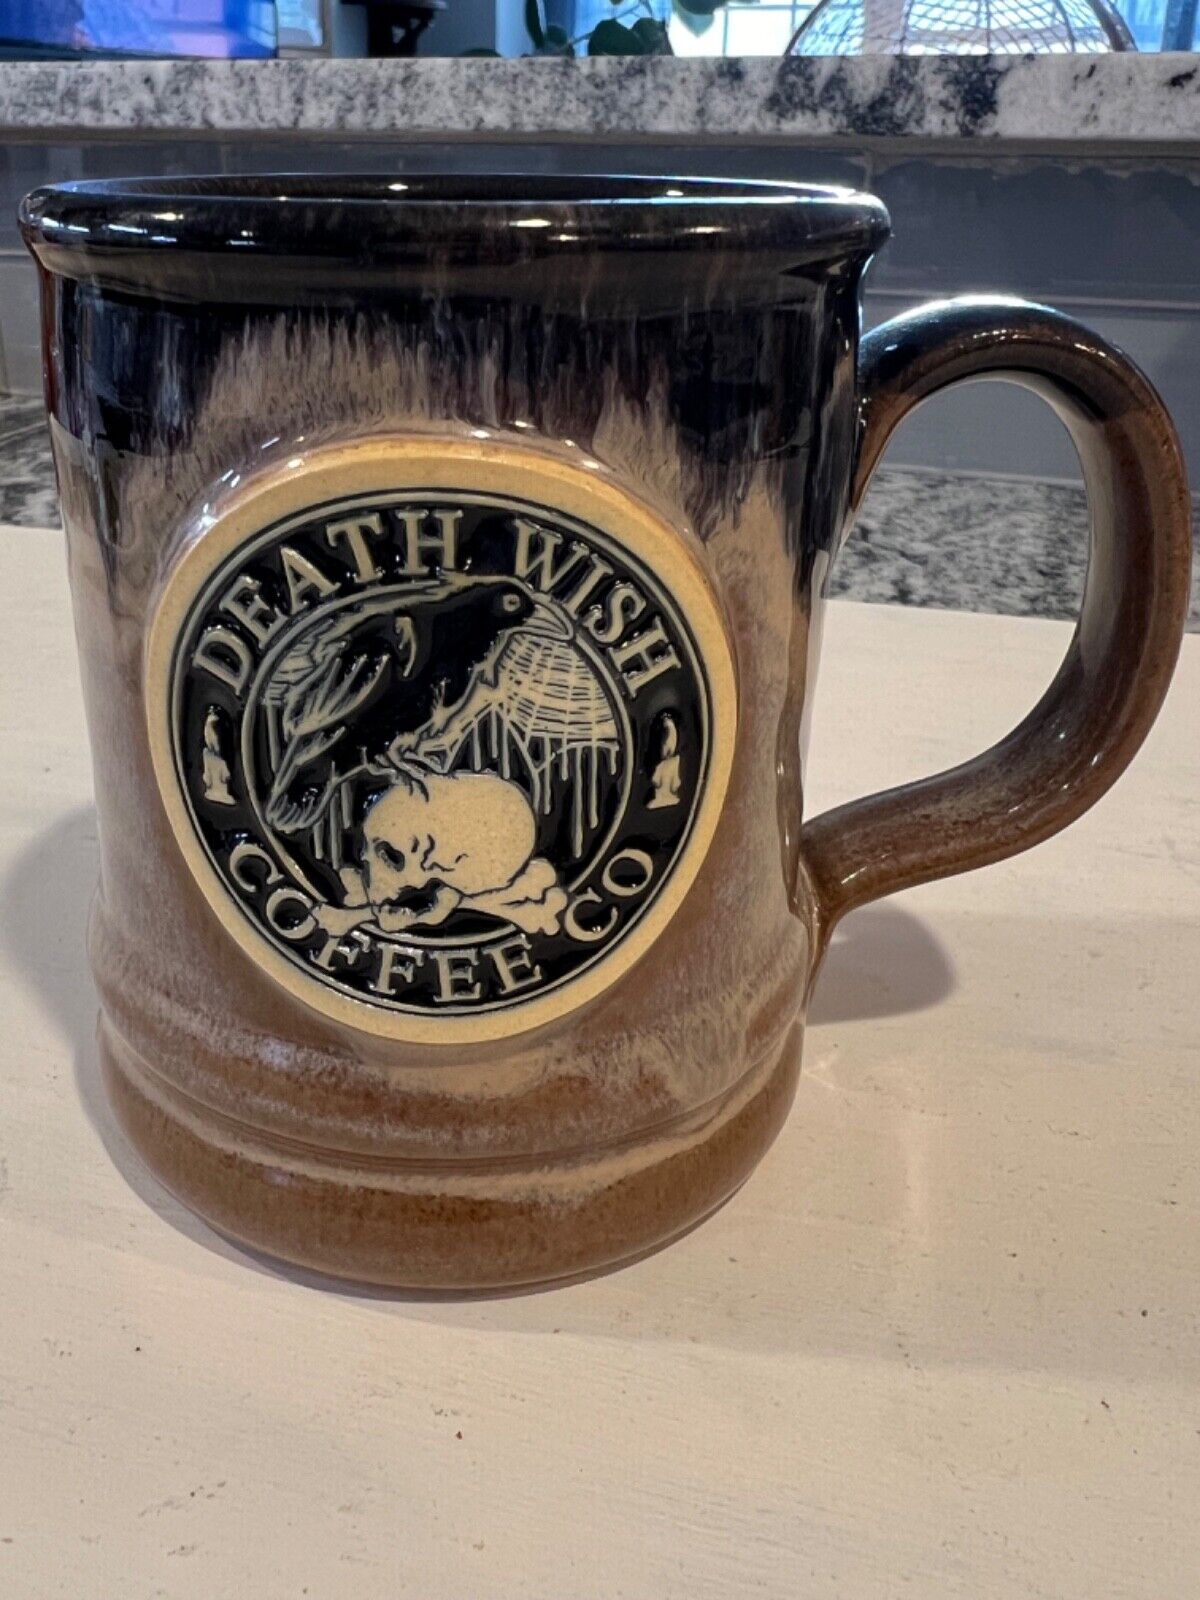 Death Wish Coffee Mug Skull and Raven Nevermore 2018 Deneen Pottery 3914/5000